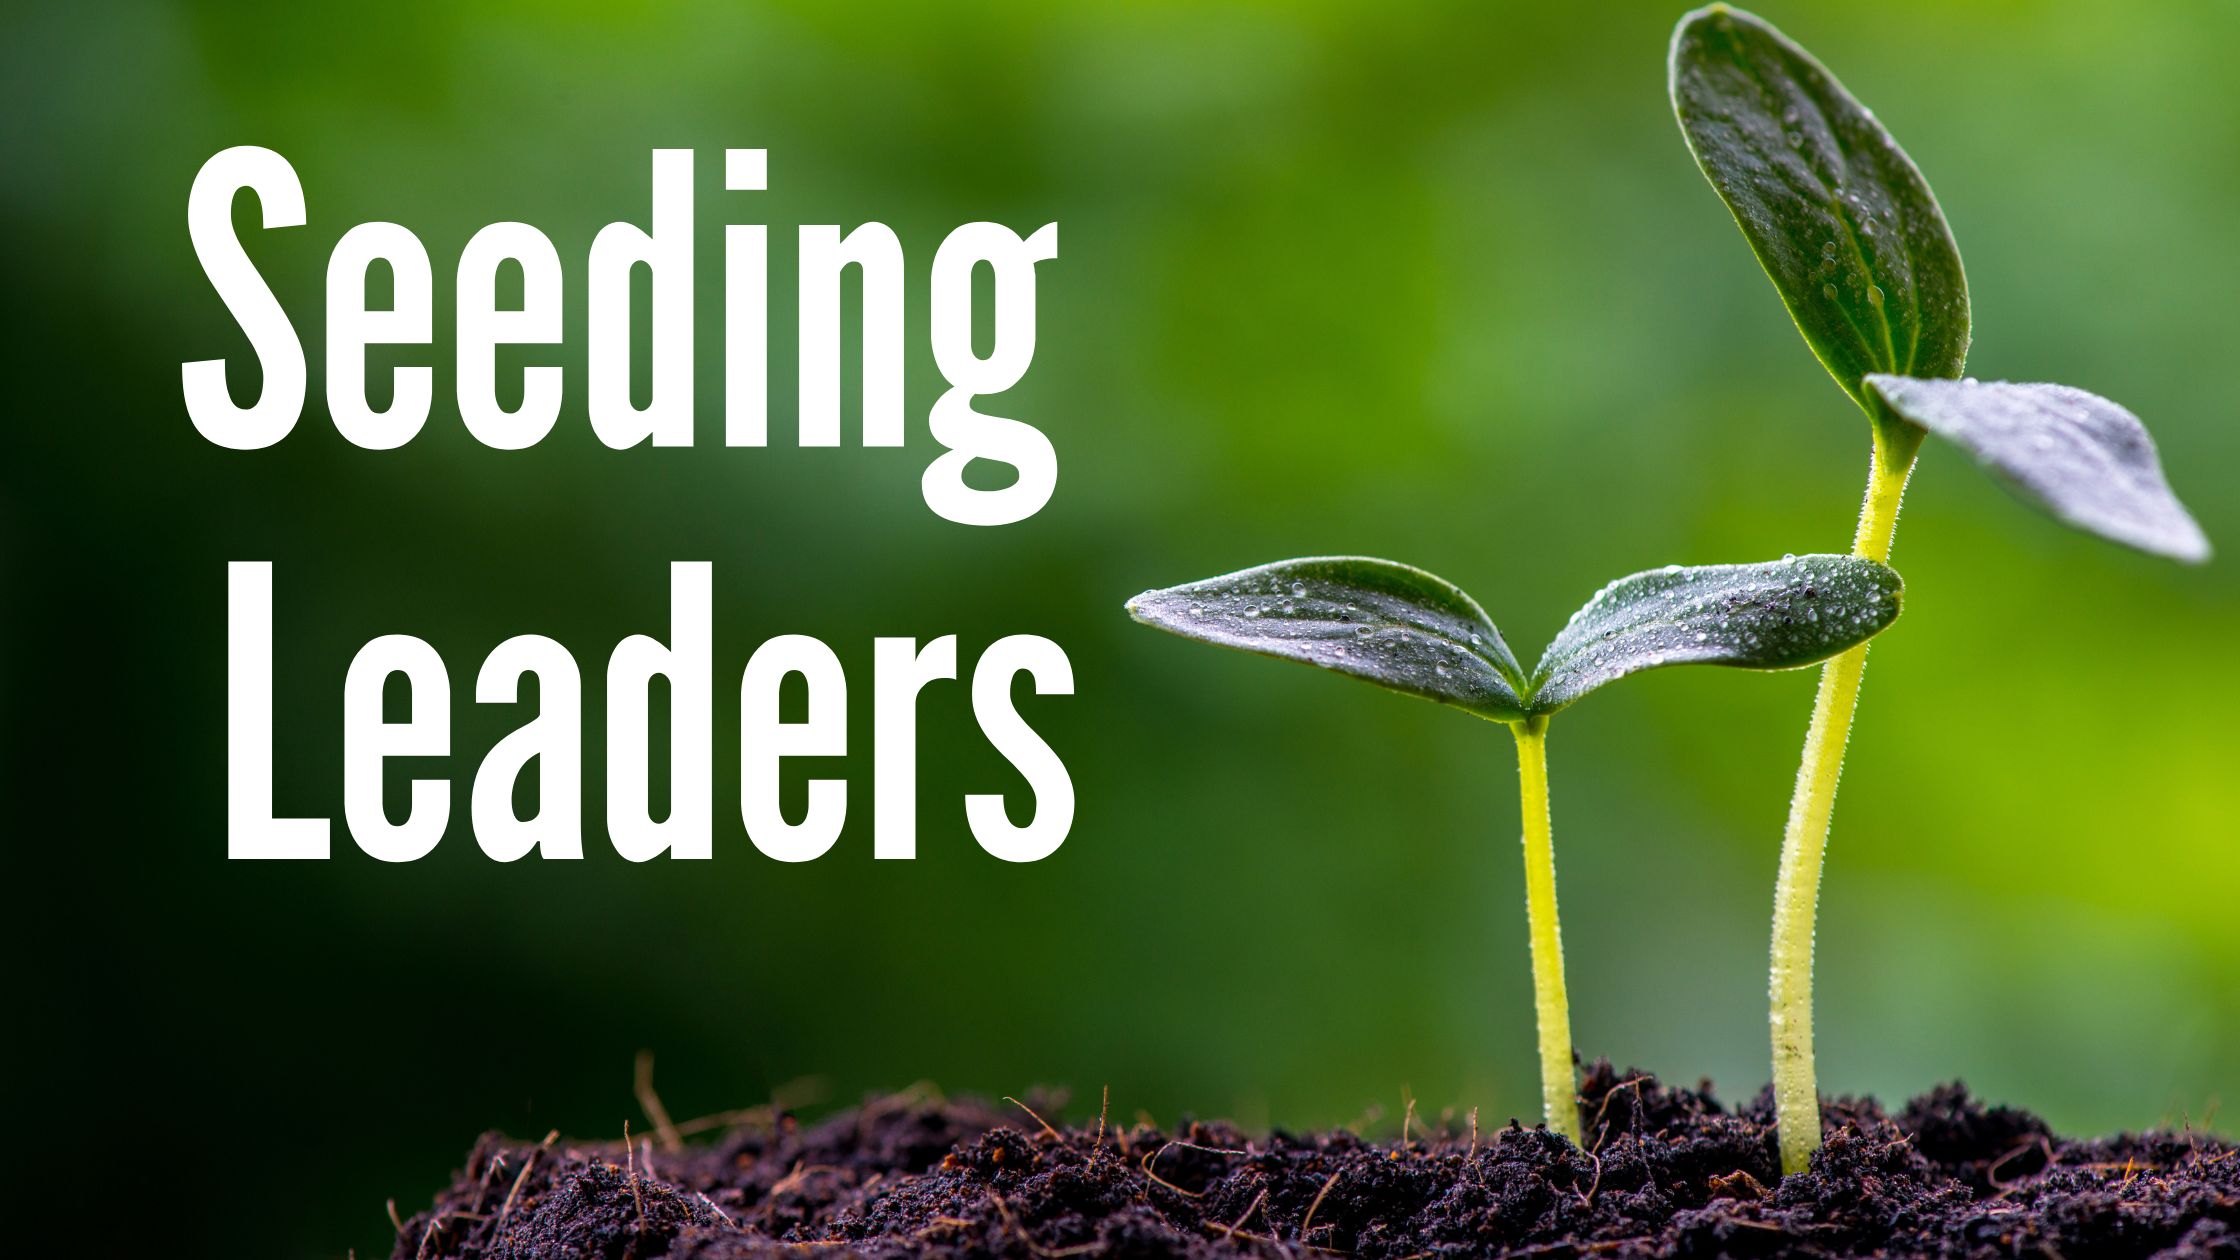 Seeding Leaders